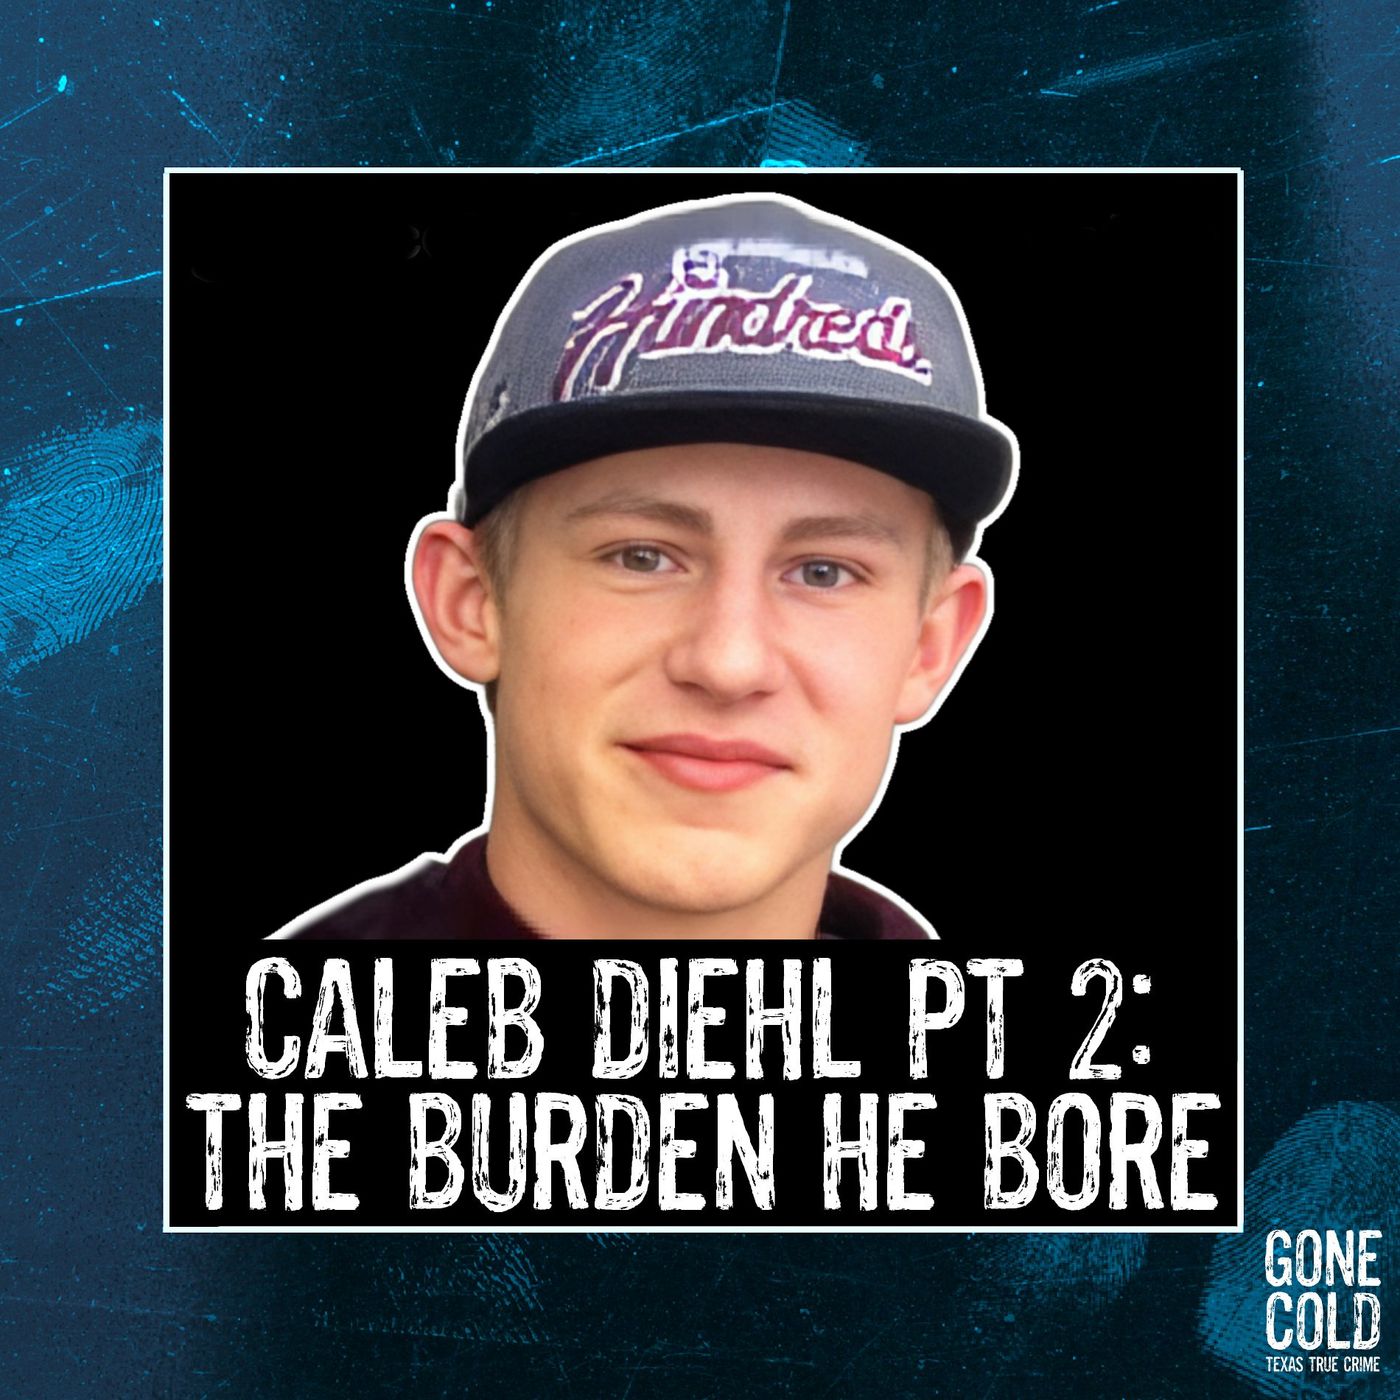 Caleb Diehl Part 2: The Burden He Bore